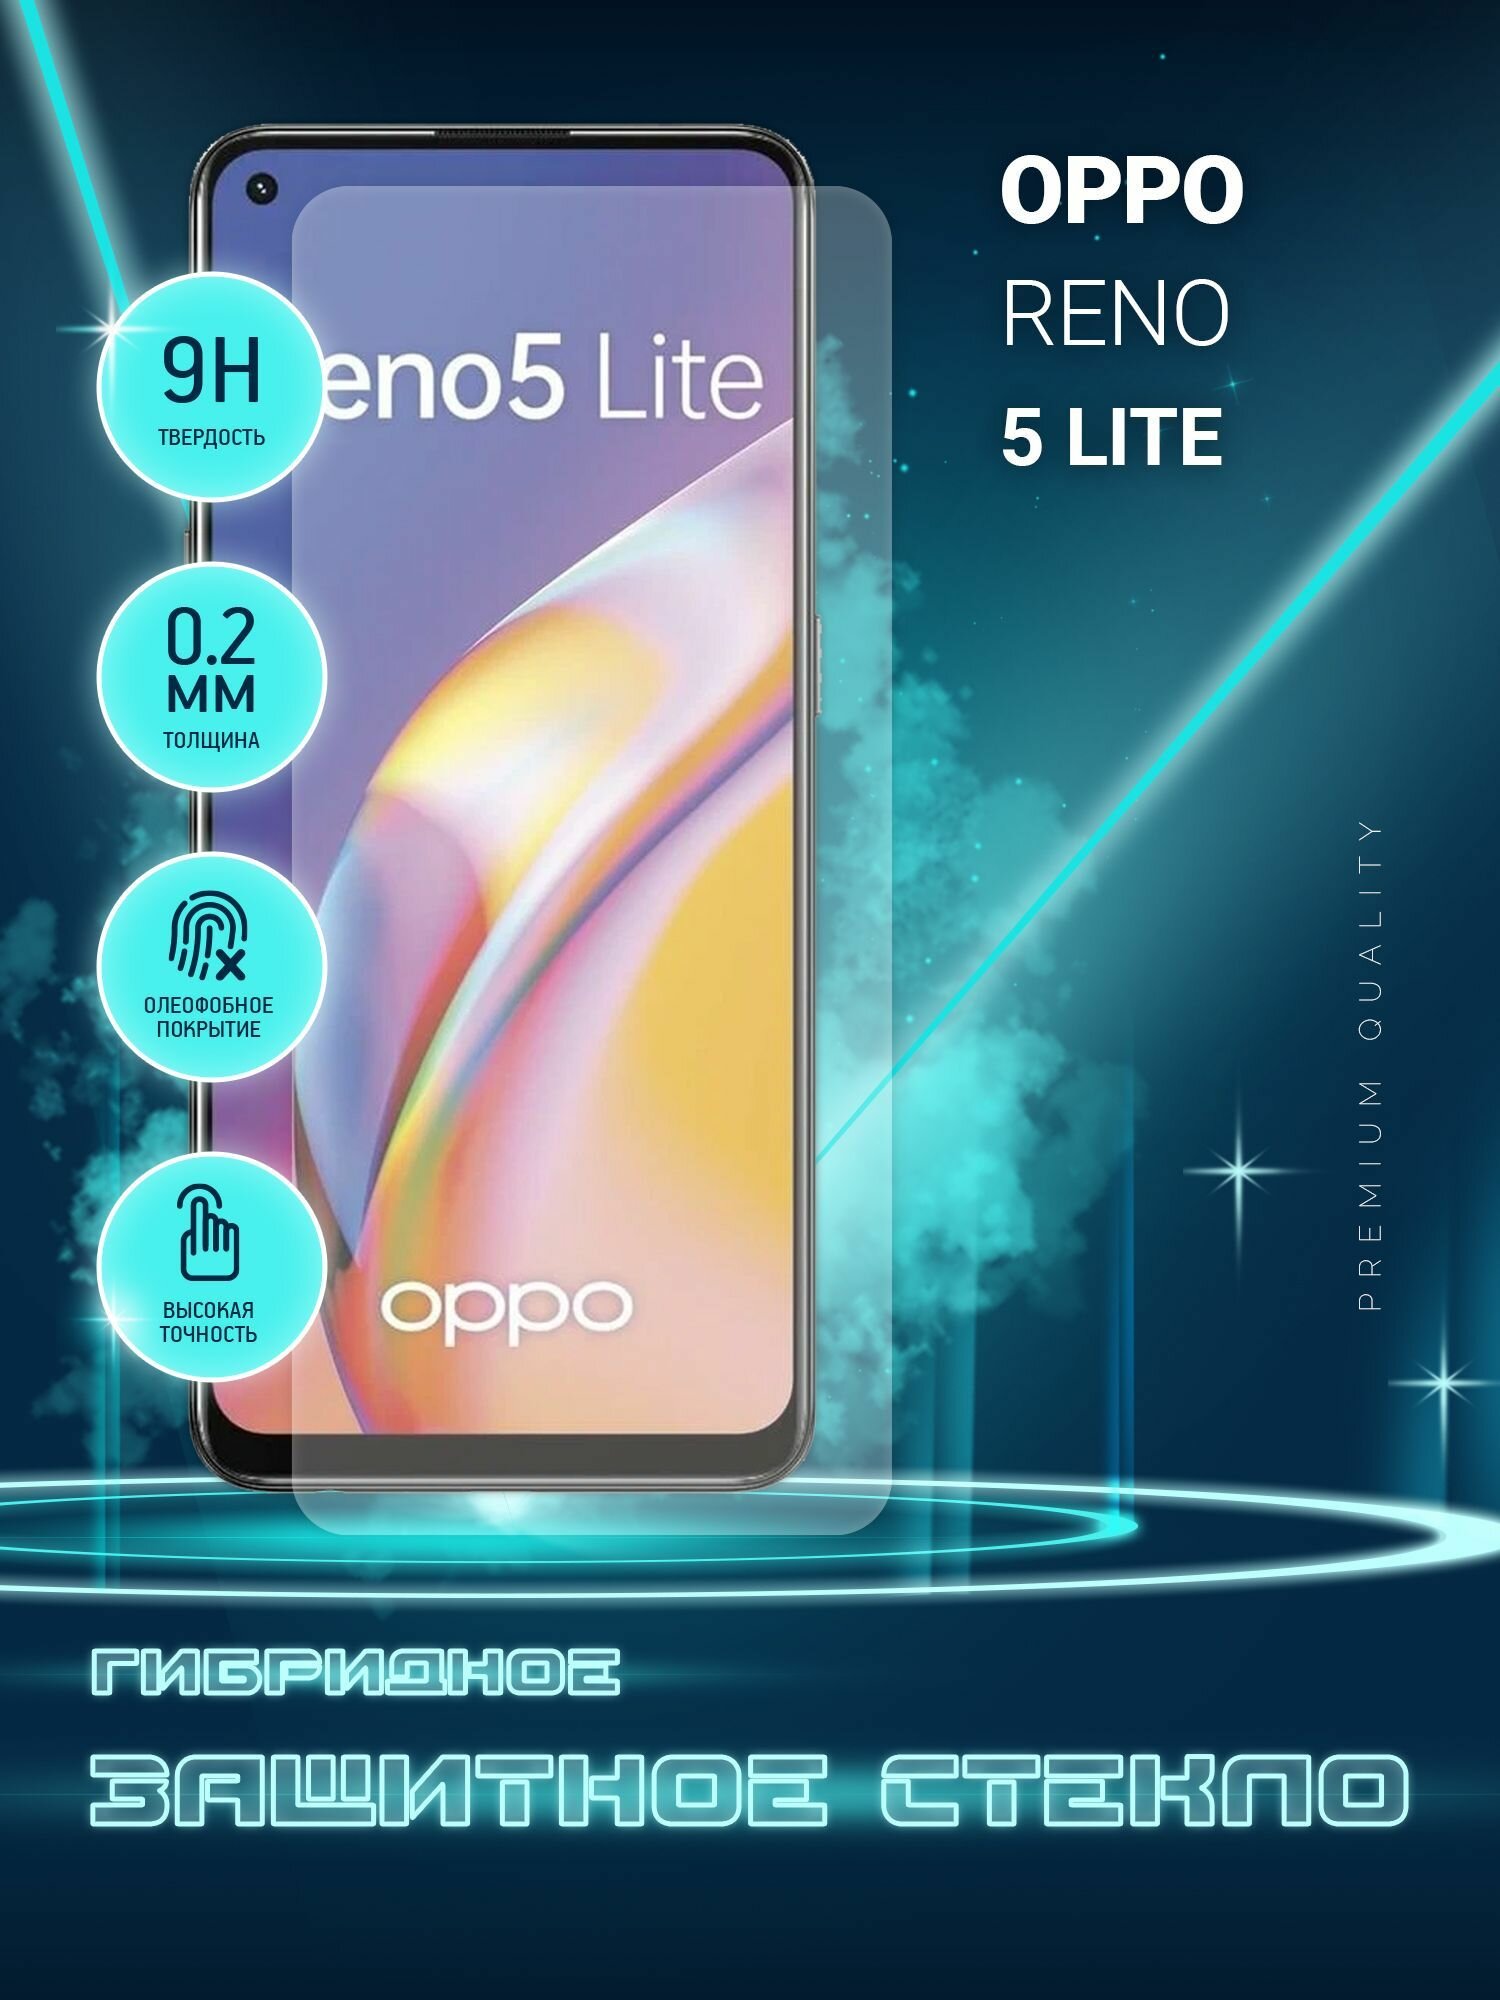 Защитное стекло для OPPO Reno 5 Lite, Оппо Рено 5 Лайт на экран, гибридное (пленка + стекловолокно), Crystal boost